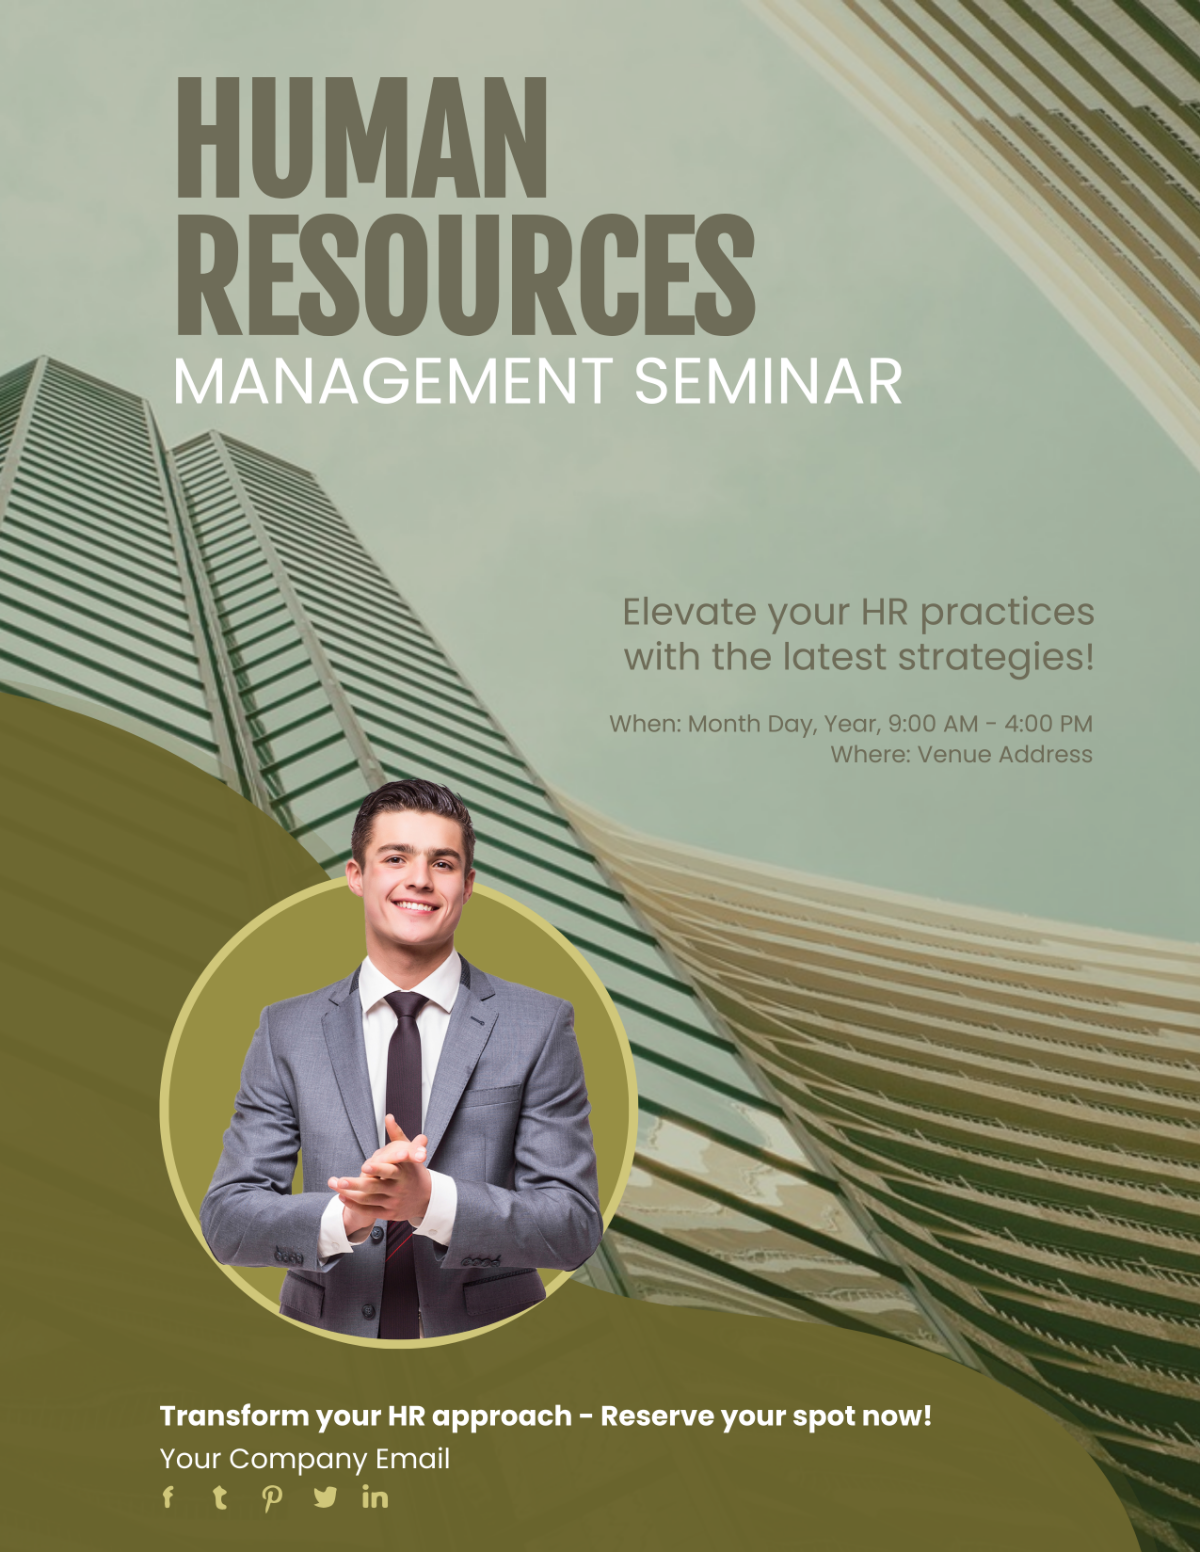 Human Resources Management Seminar Flyer